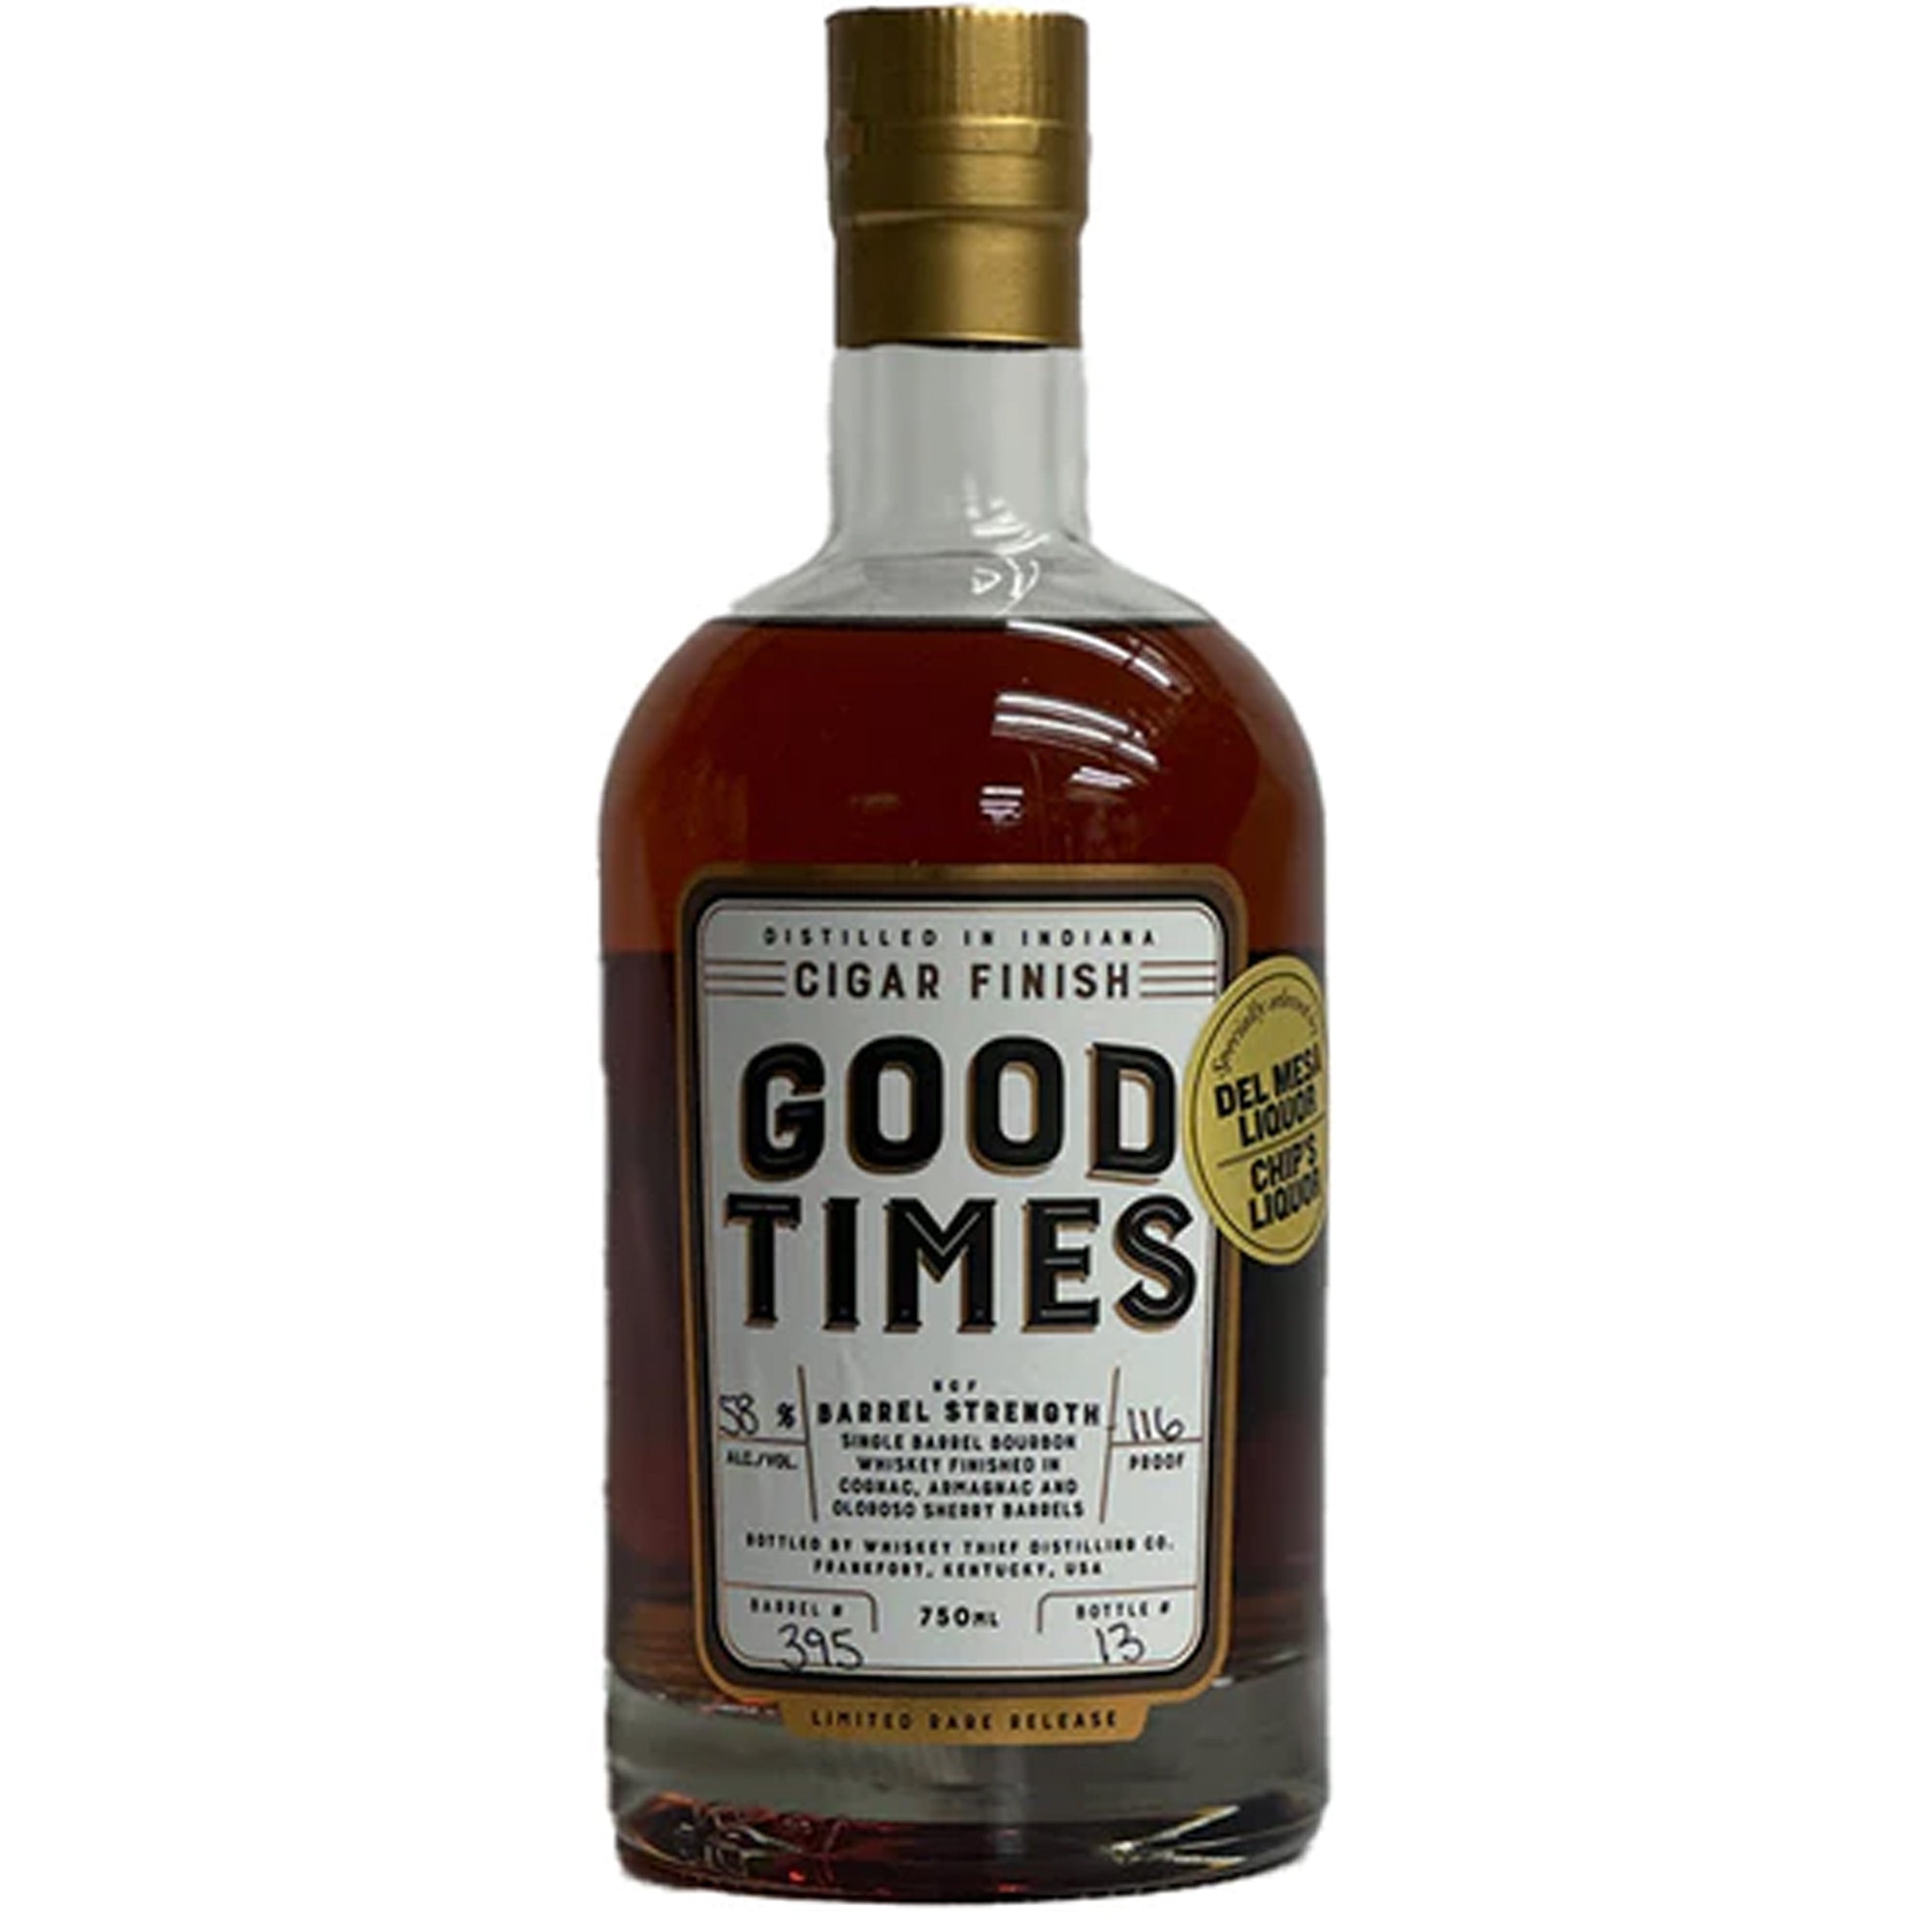 Good Times Cigar Finish 'Del Mesa Liquor x Chip's Liquor' Single Barrel Select Bourbon Whiskey